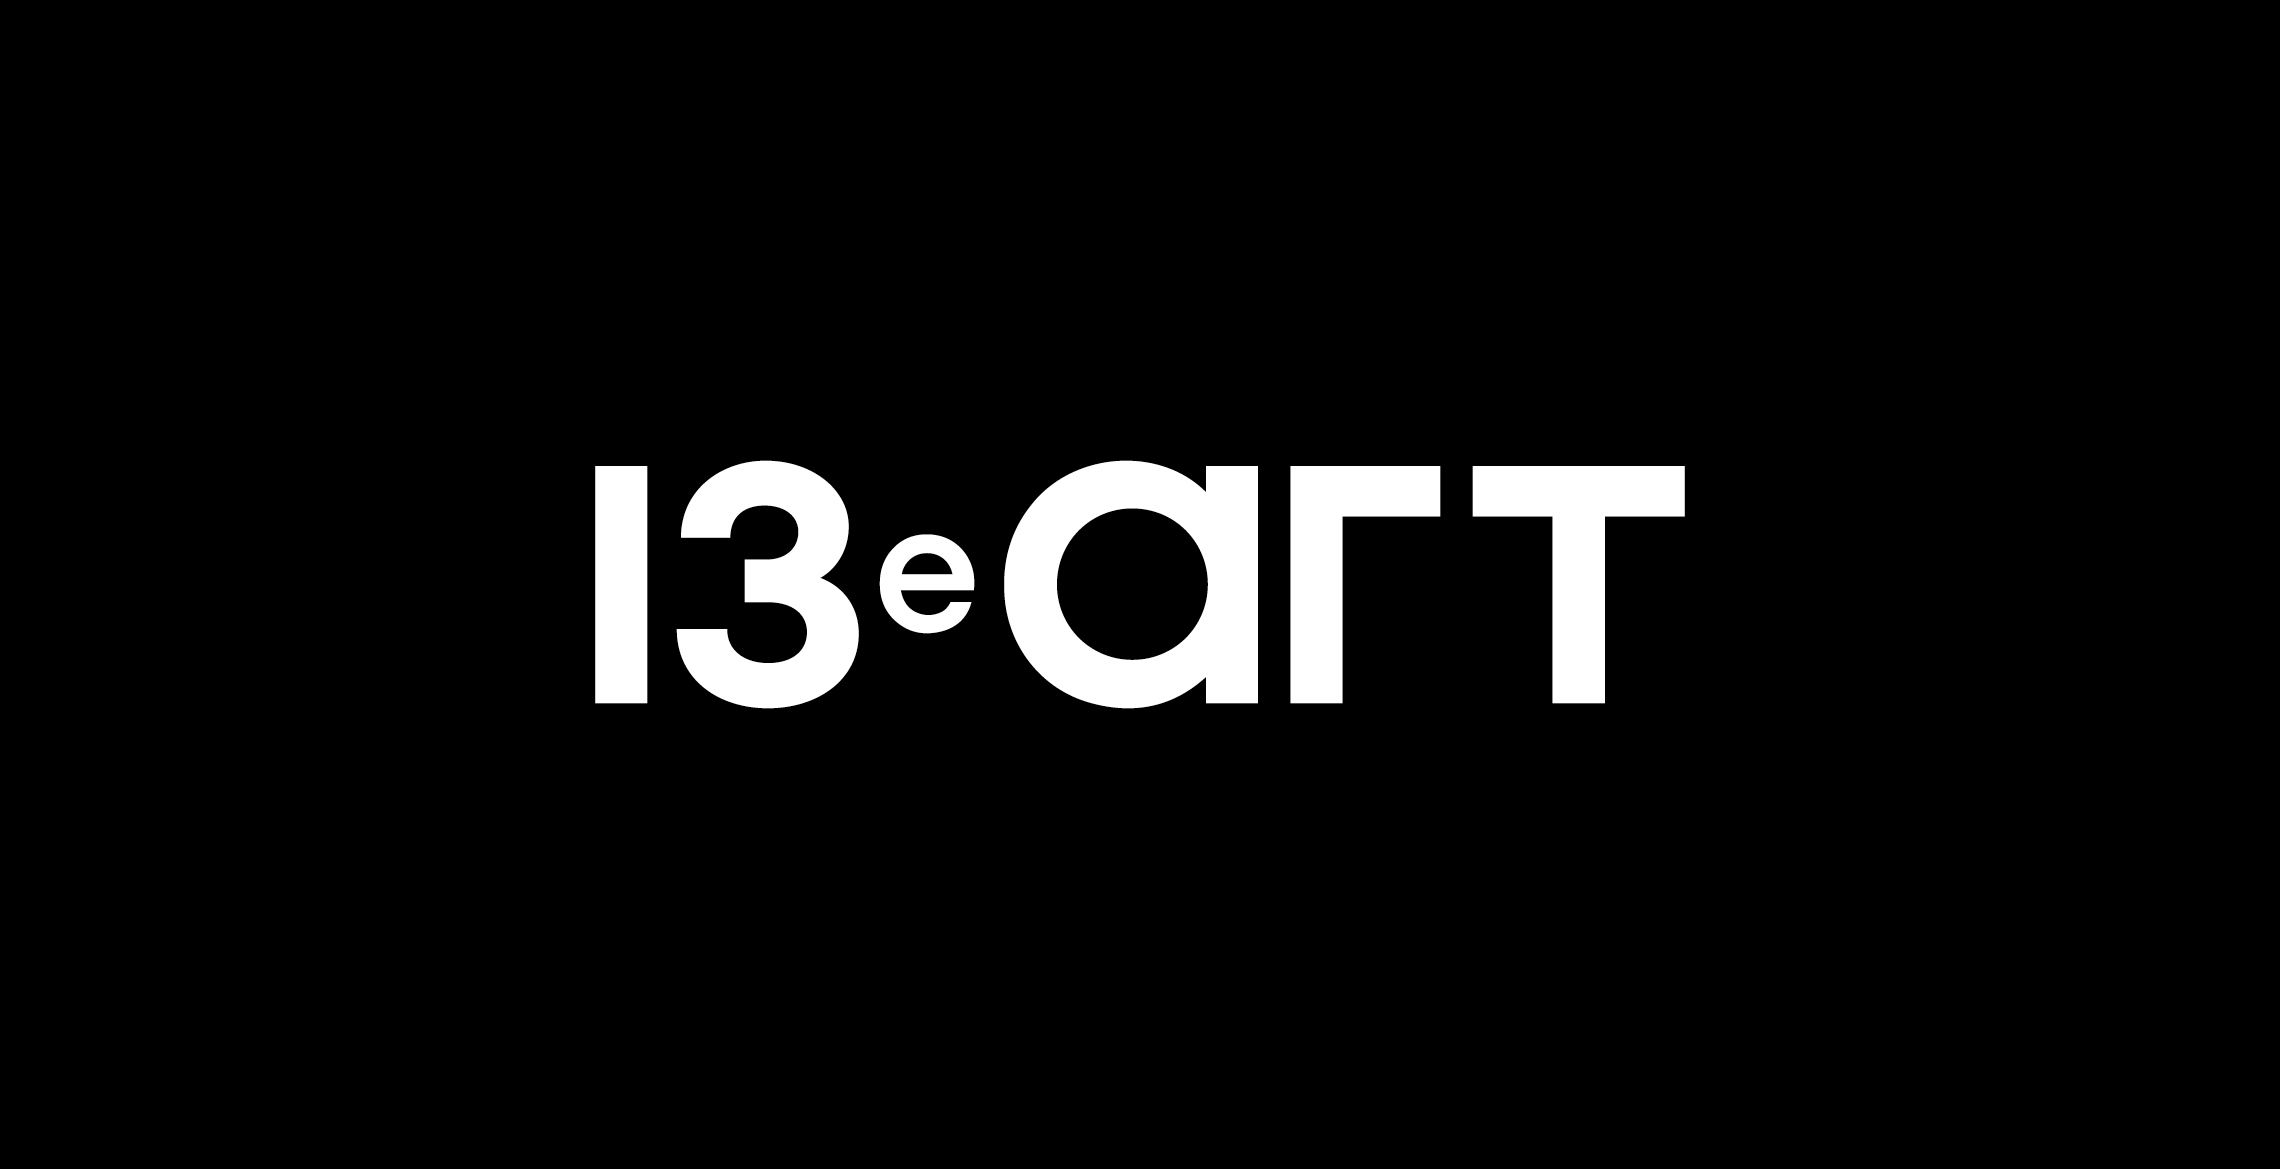 13e art salle de concert Paris design logotype graphisme